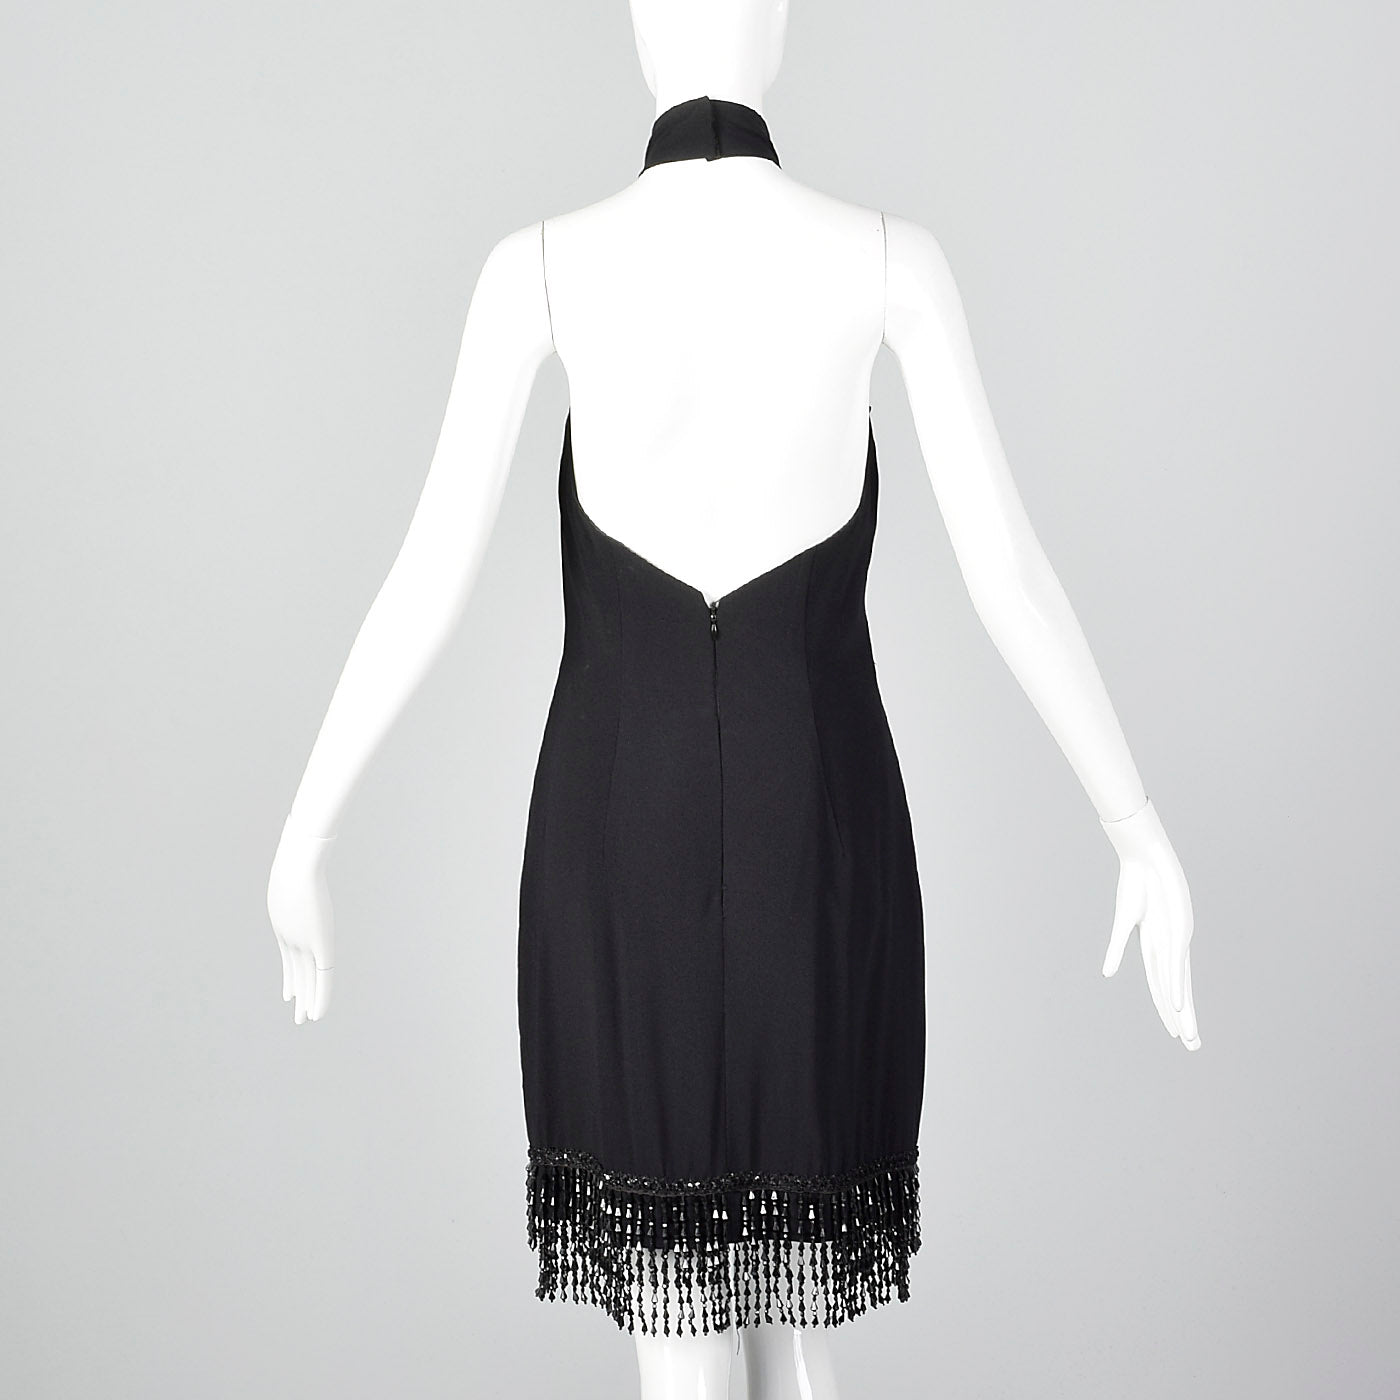 1980s Victor Costa Black Halter Dress